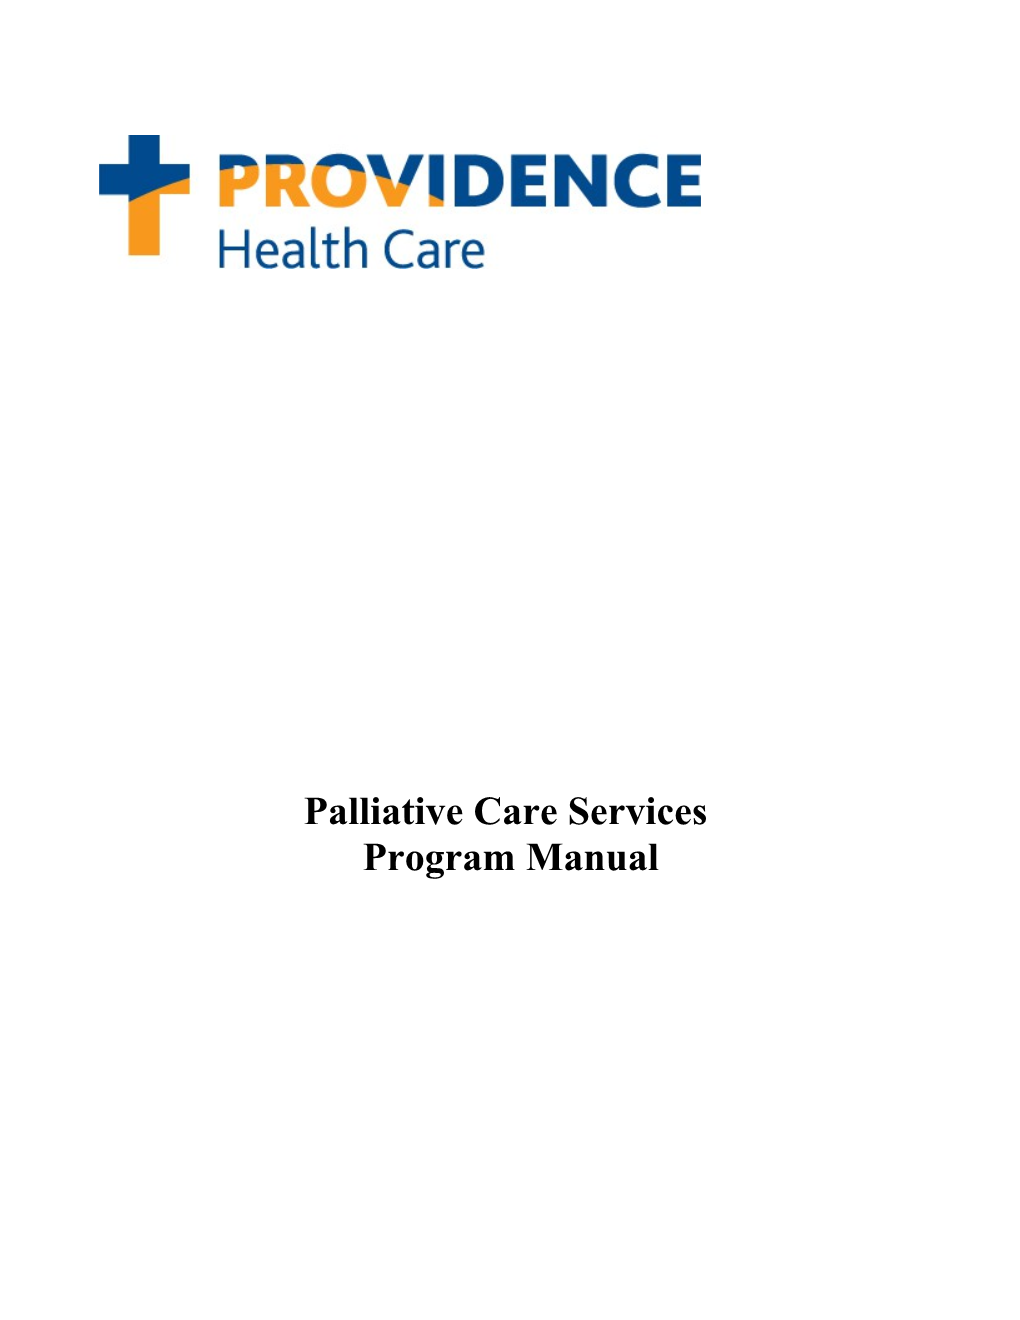 Providence Health Care Palliative Care Services